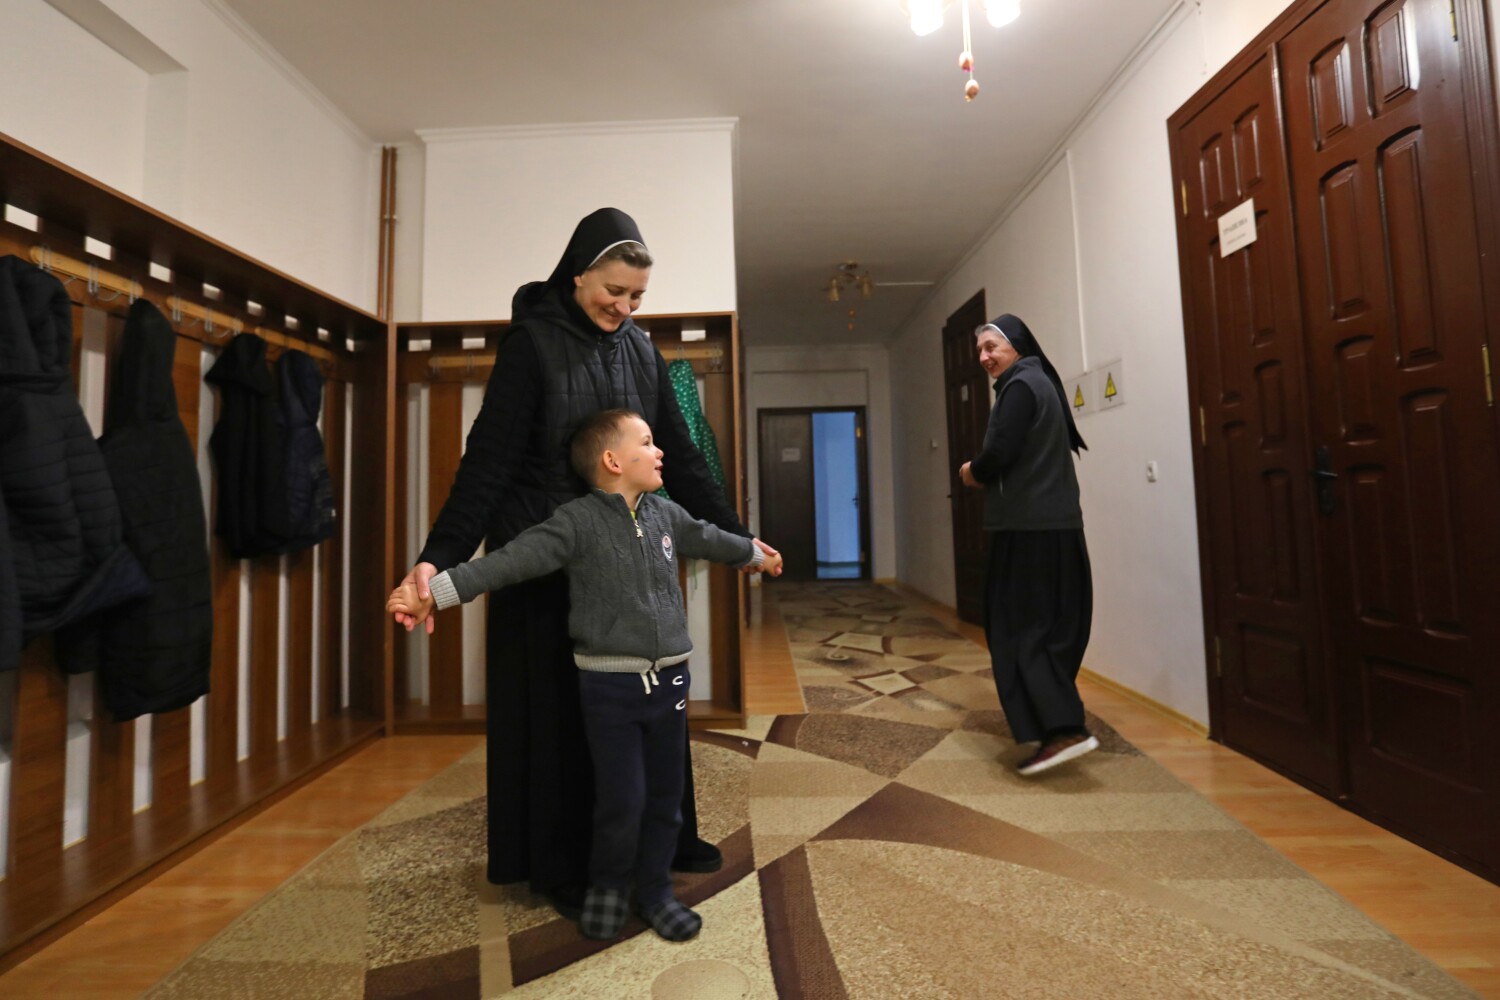 'They belong here': Ukrainian nuns take in dozens displaced by war